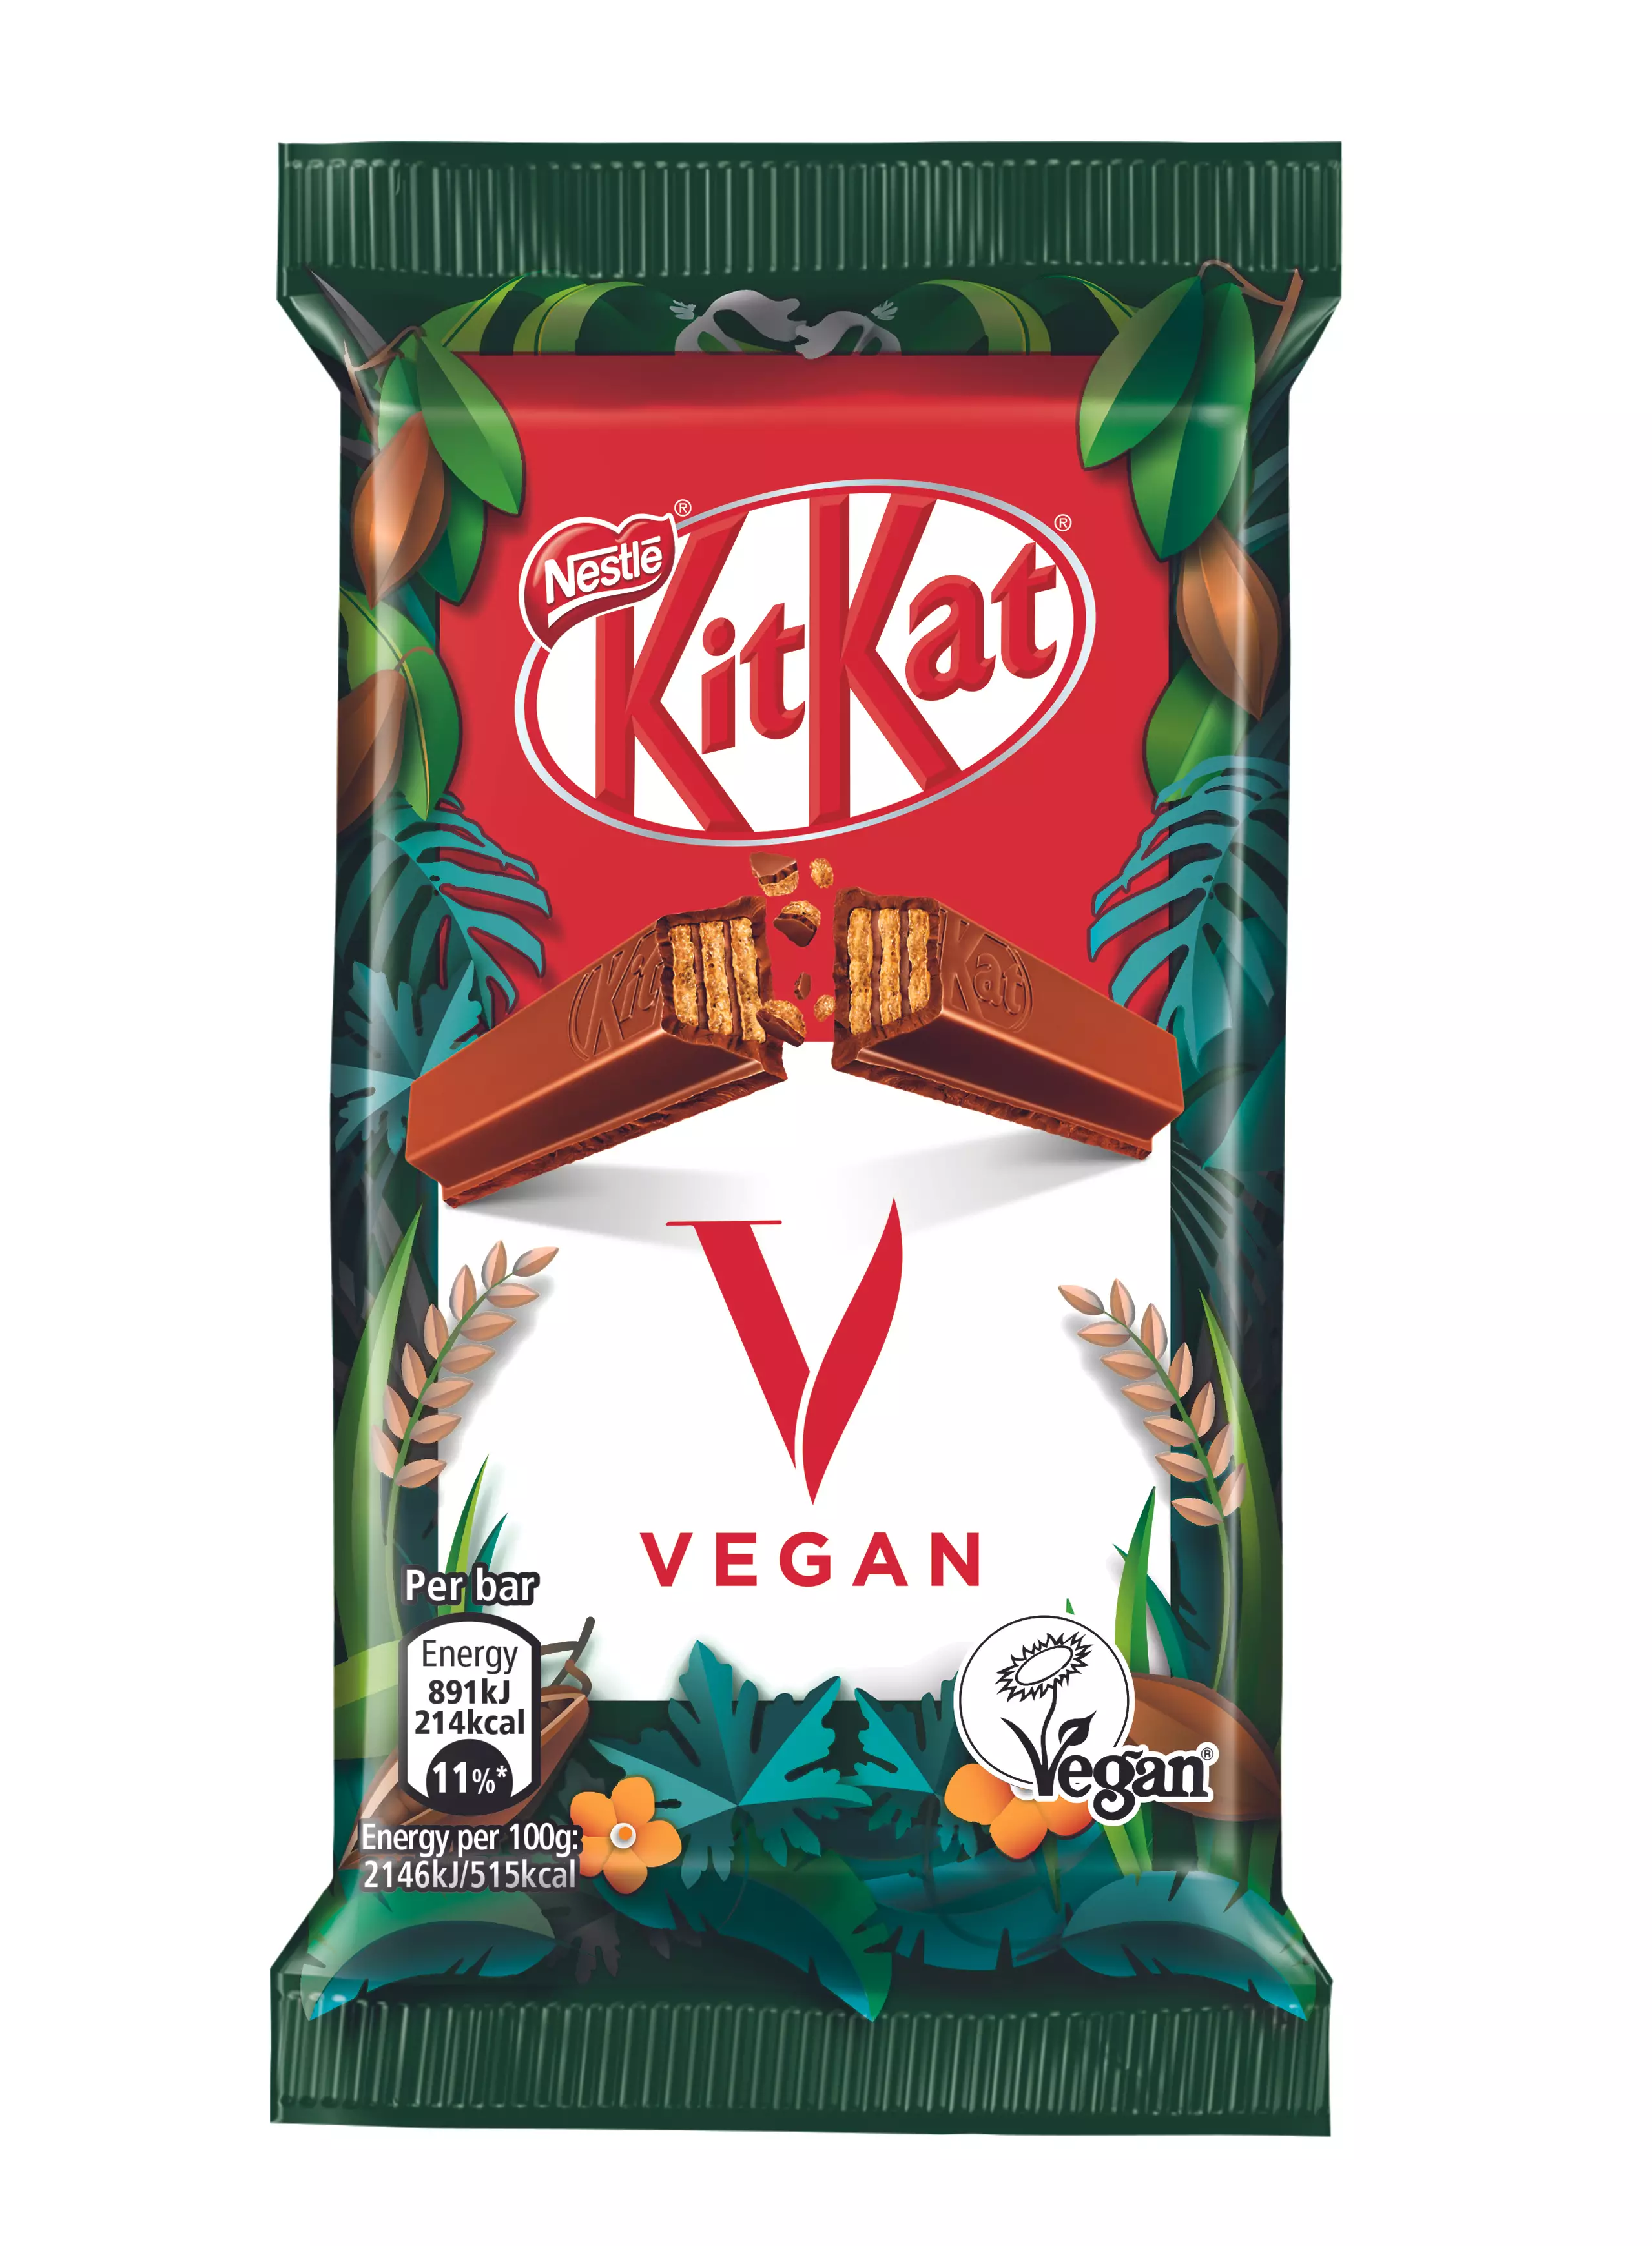 The vegan KitKat - called KitKat V - is made from plant based ingredients (